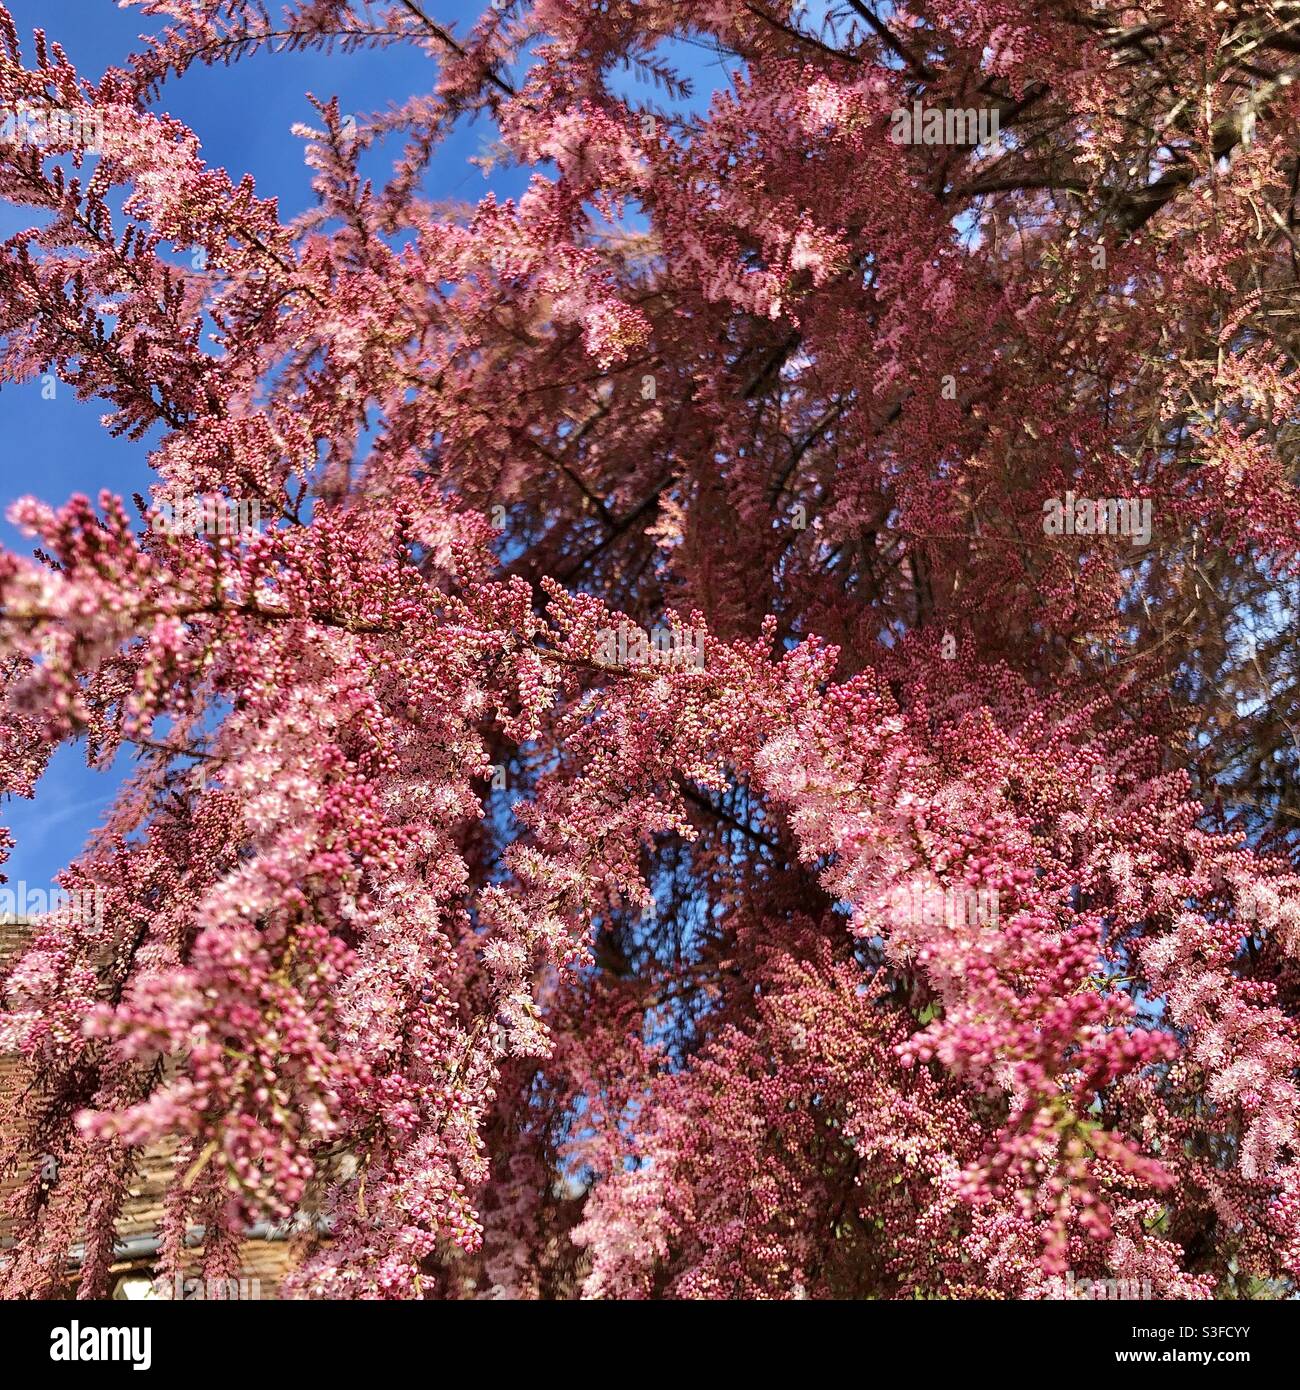 Tamarisk (Tamarix aphylla) tree in full blossom. Stock Photo